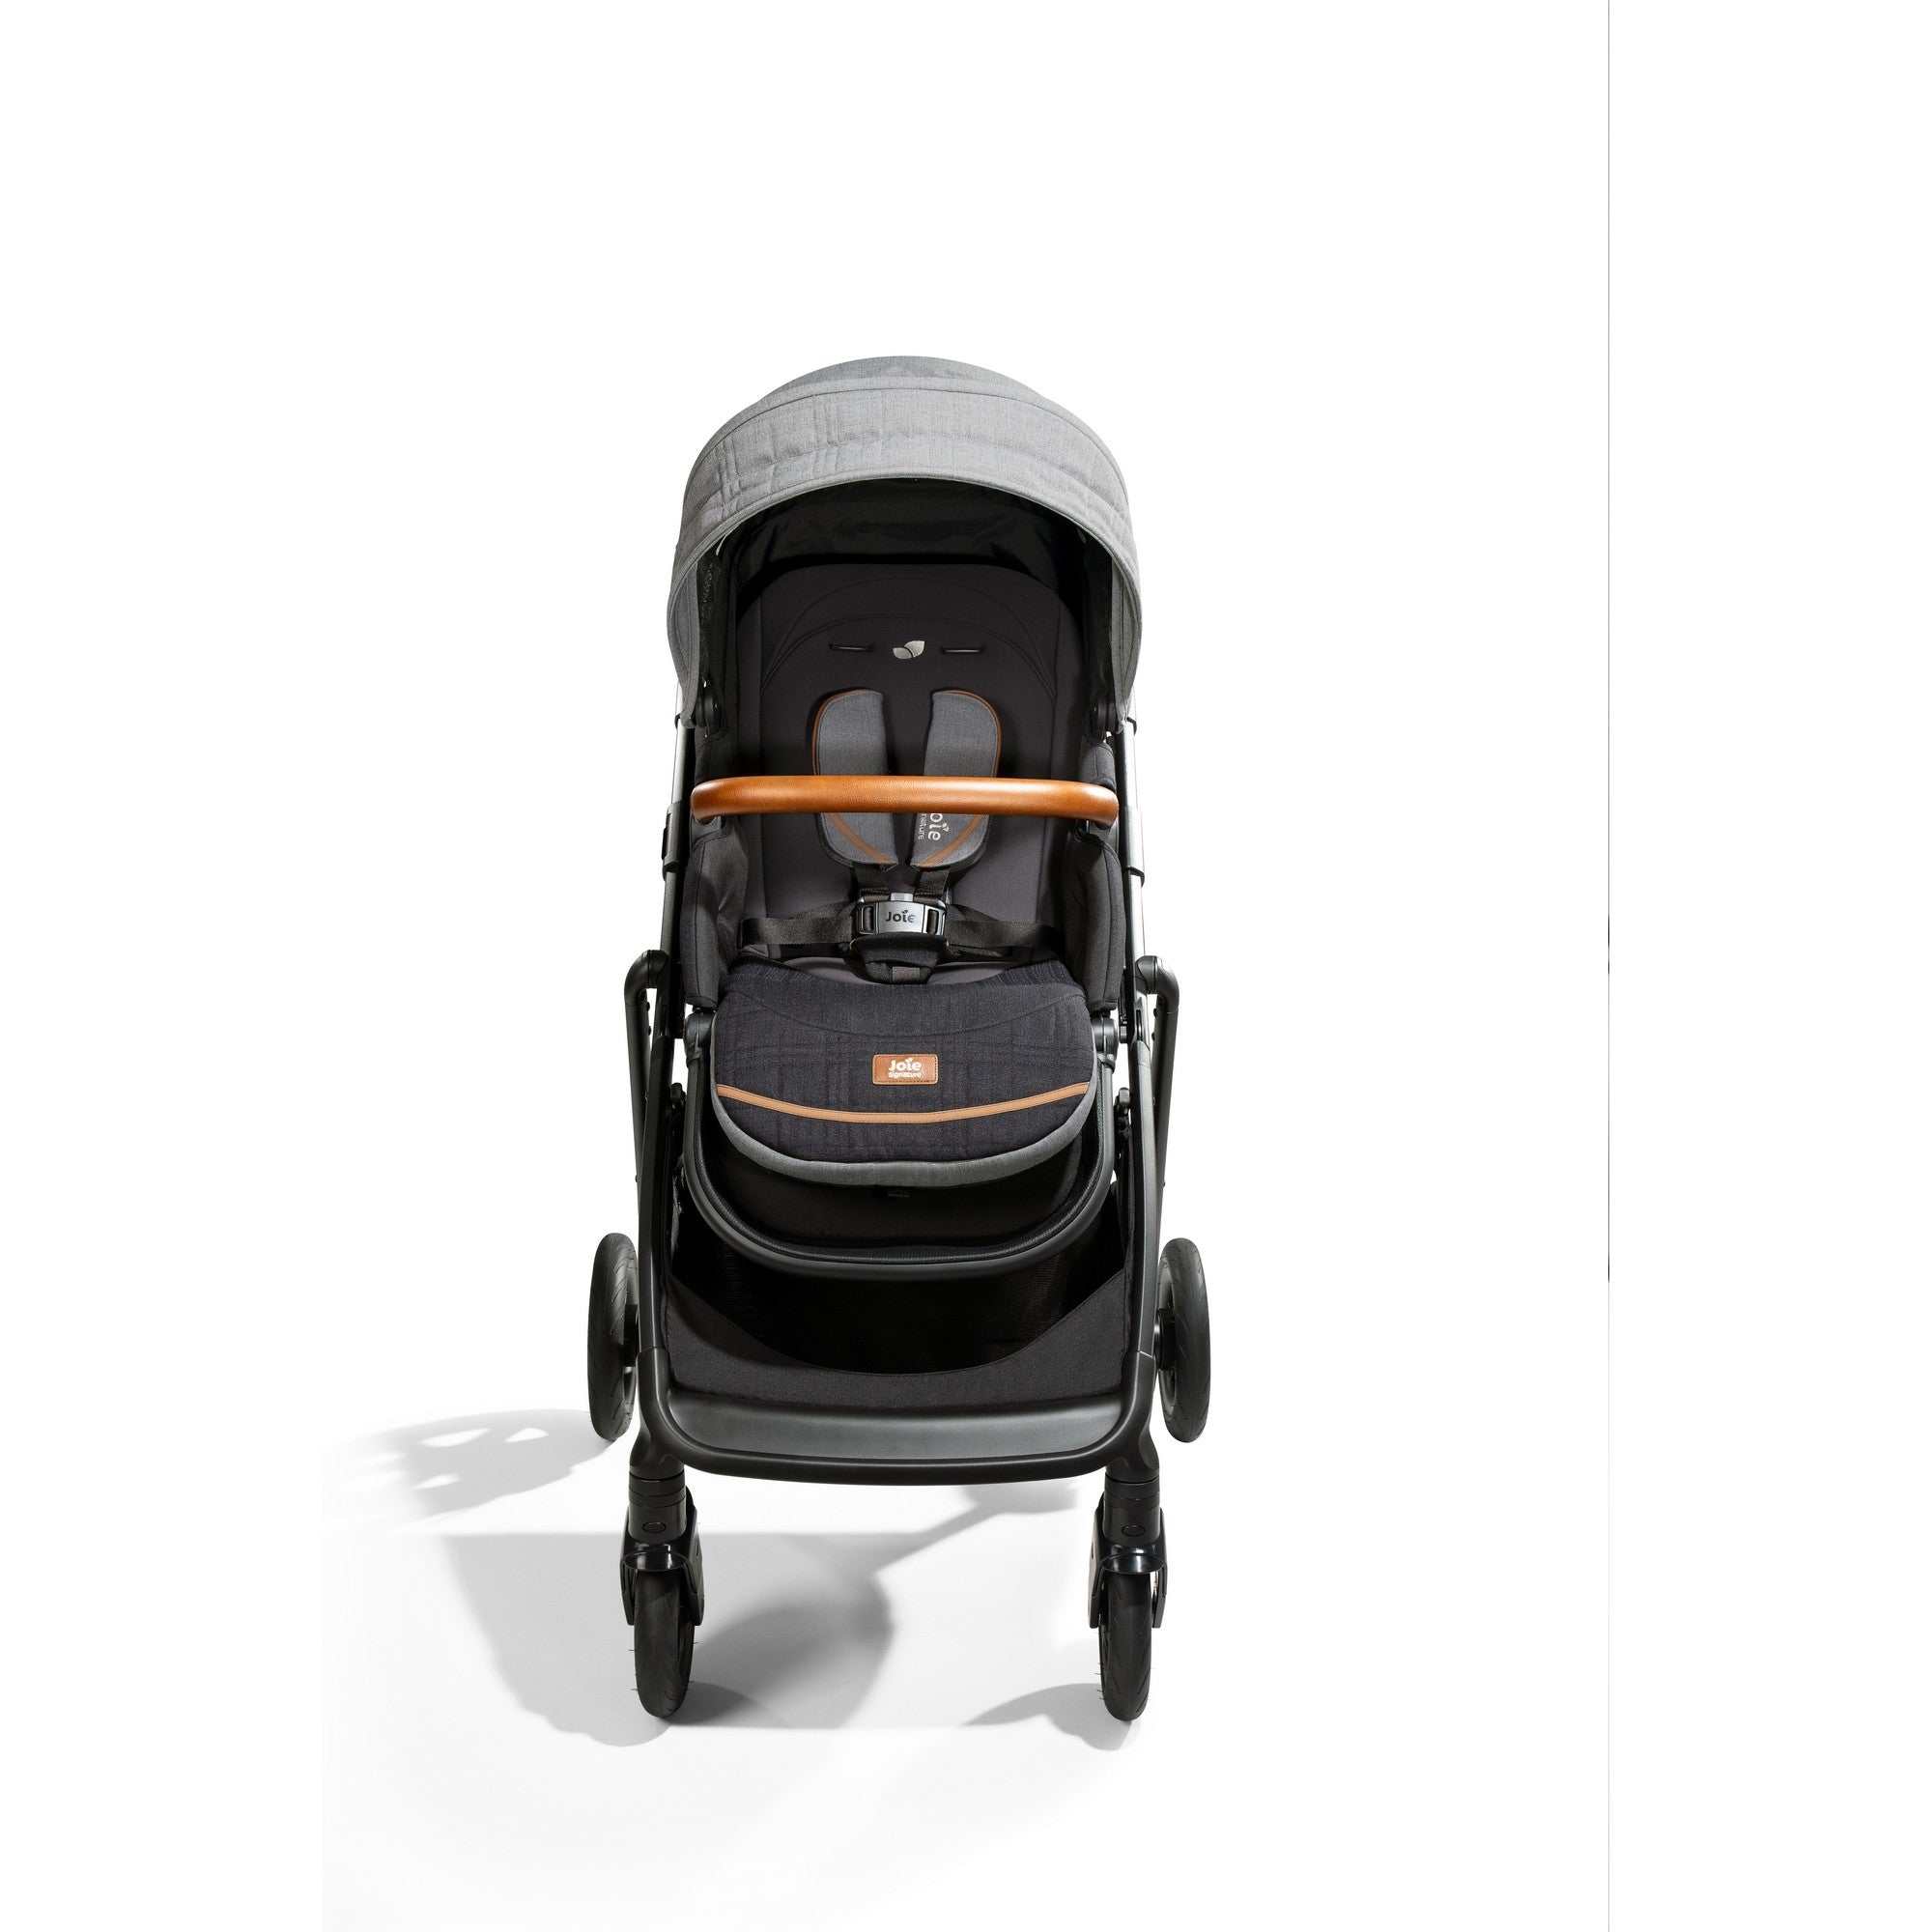 Joie Aeria S Height Adjustable 4 in 1 Pram Baby Stroller - Carbon